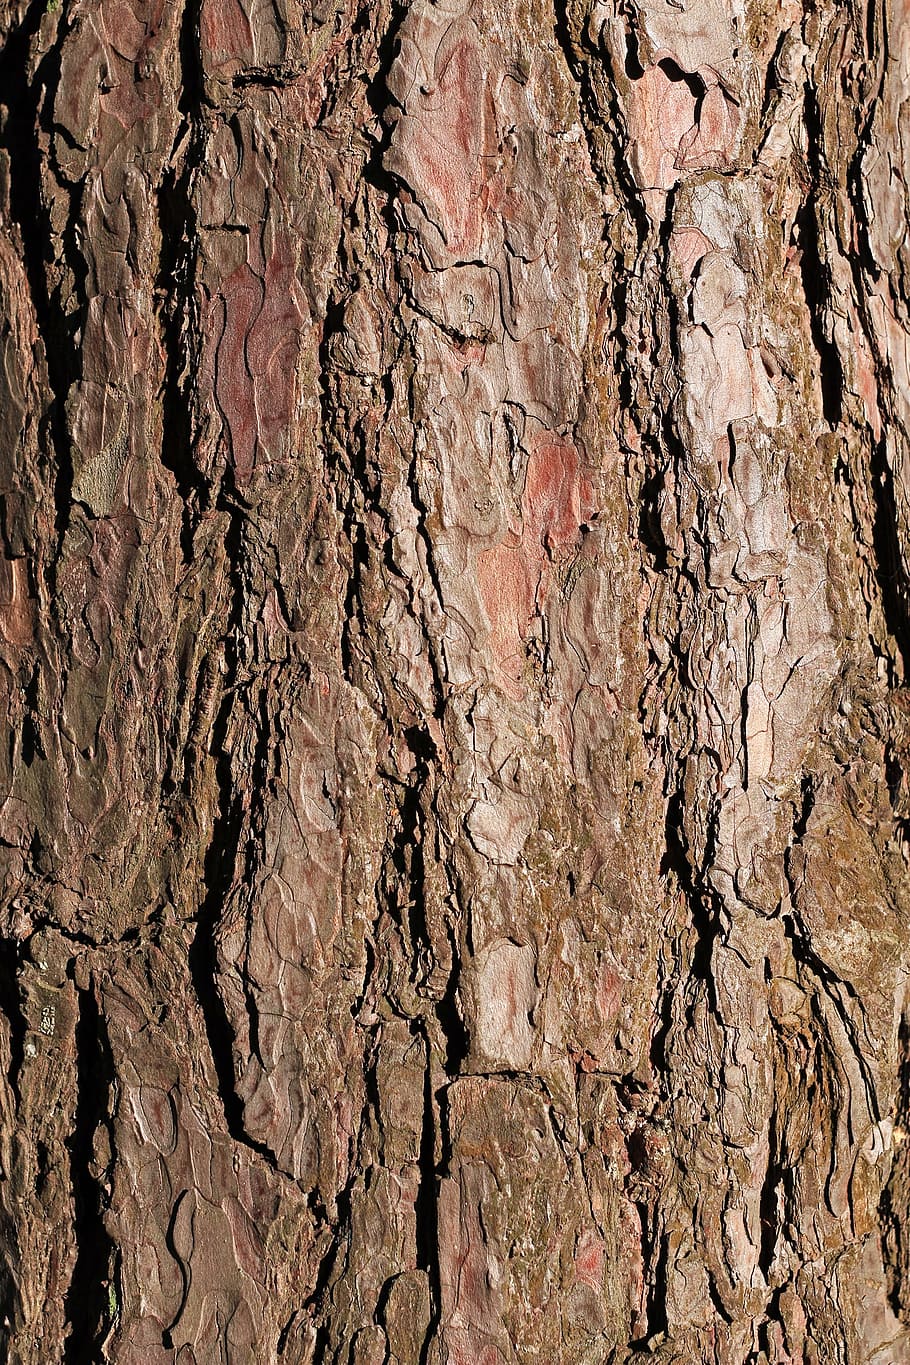 Bark, Pine, Tree, Texture, Background, pine, tree, brown, close, upright, textured